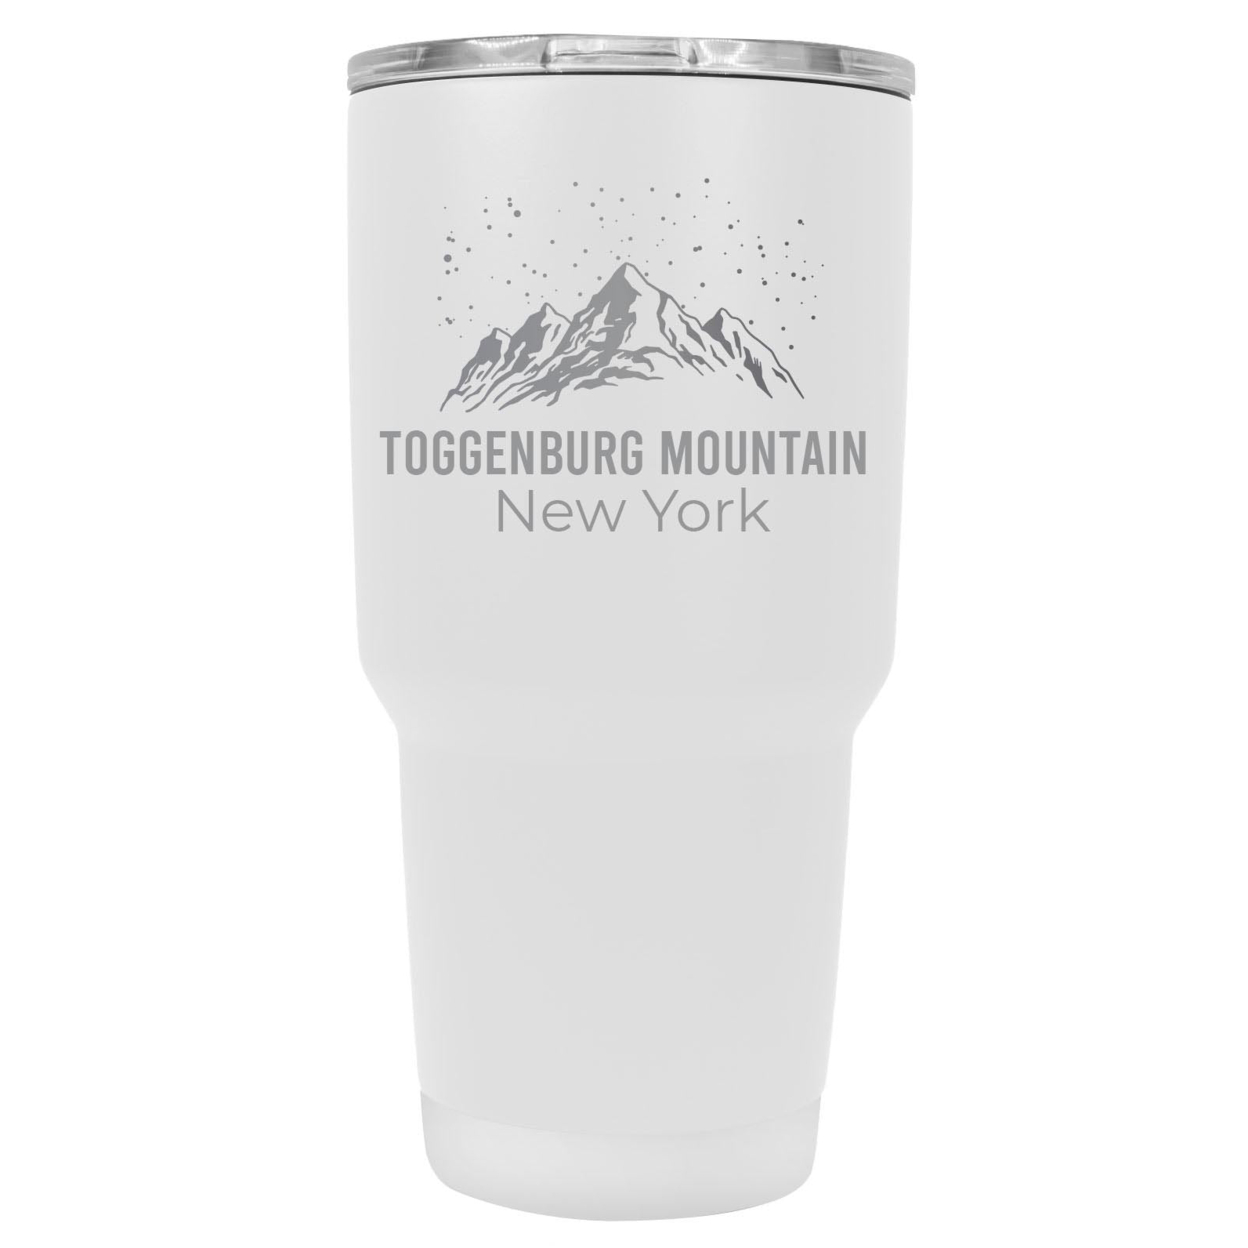 Toggenburg Mountain New York Ski Snowboard Winter Souvenir Laser Engraved 24 Oz Insulated Stainless Steel Tumbler - Red